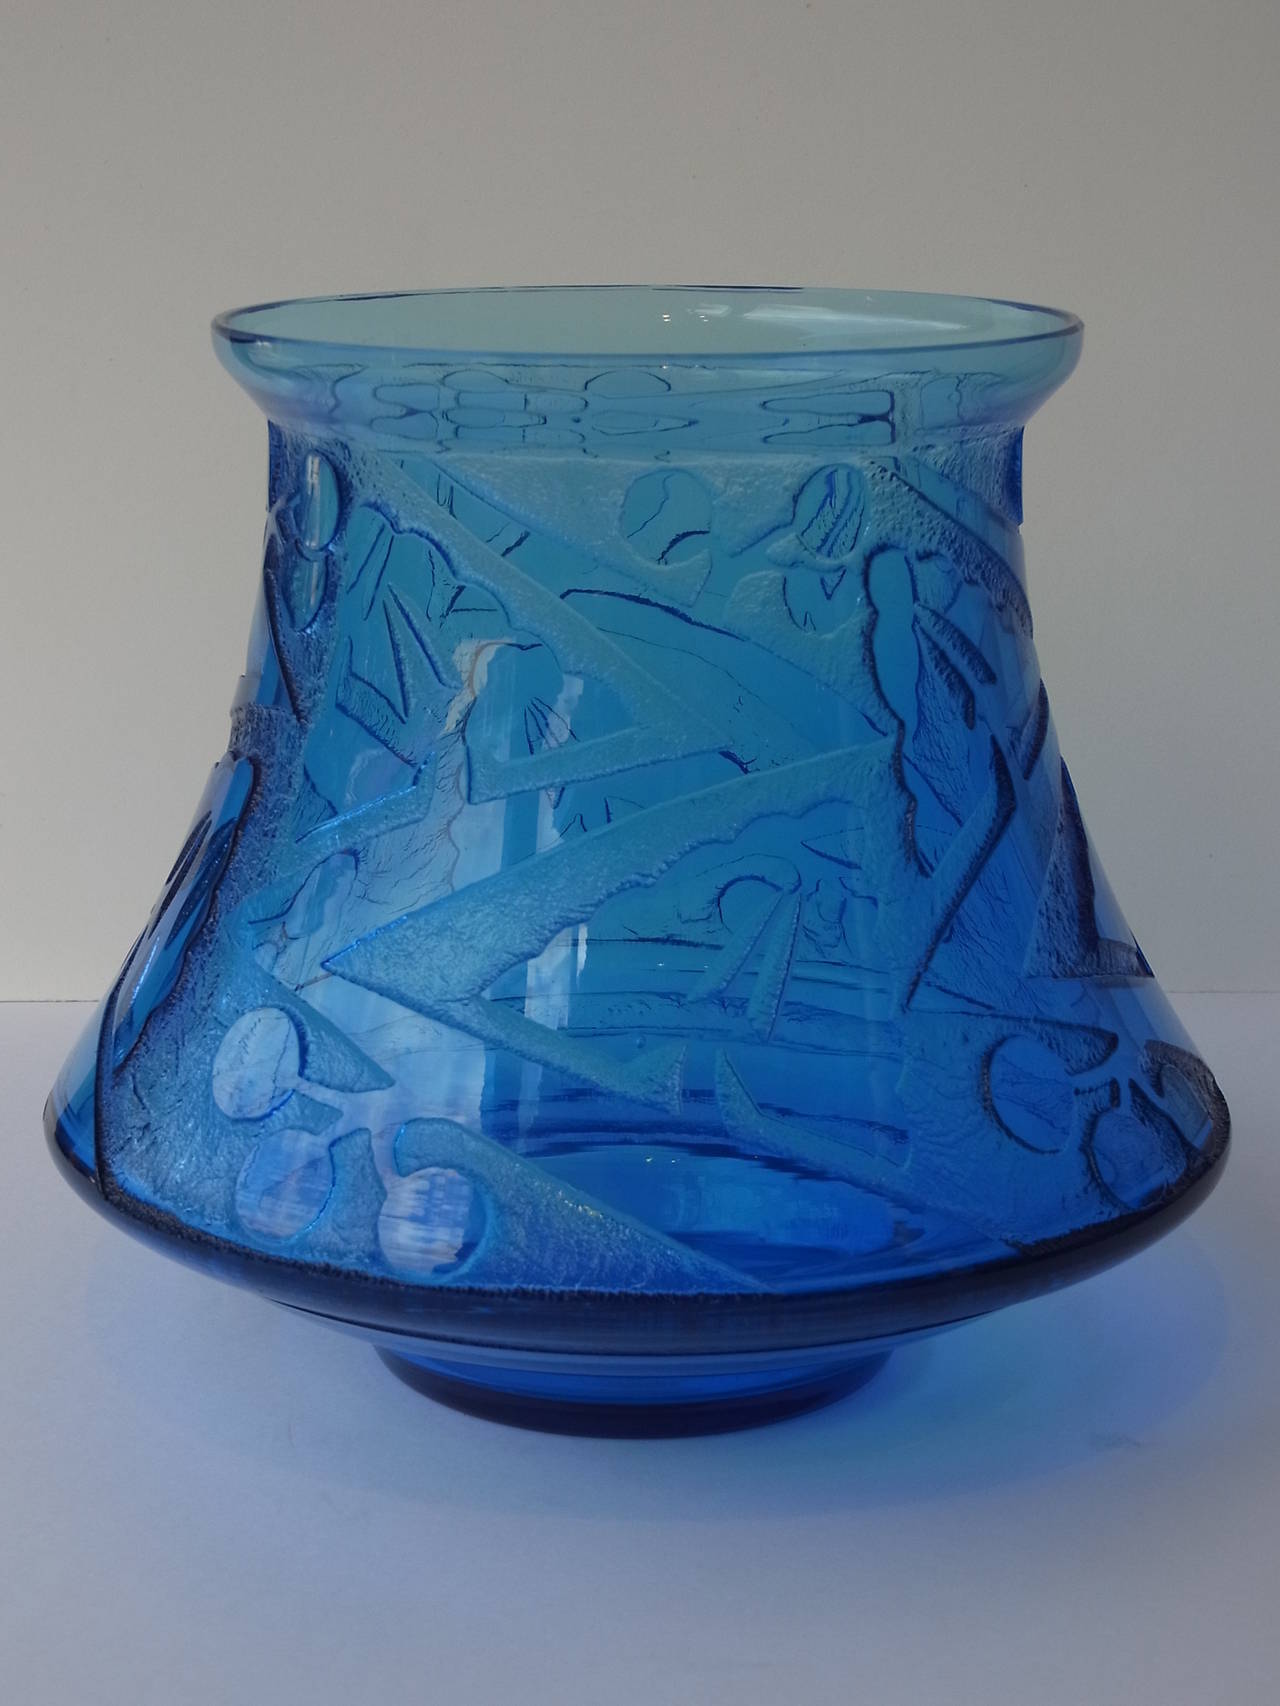 A bleu geometric decor acid etched glass vase, circa 1930.
Signed Daum Nancy France with the cross of Lorraine.

 